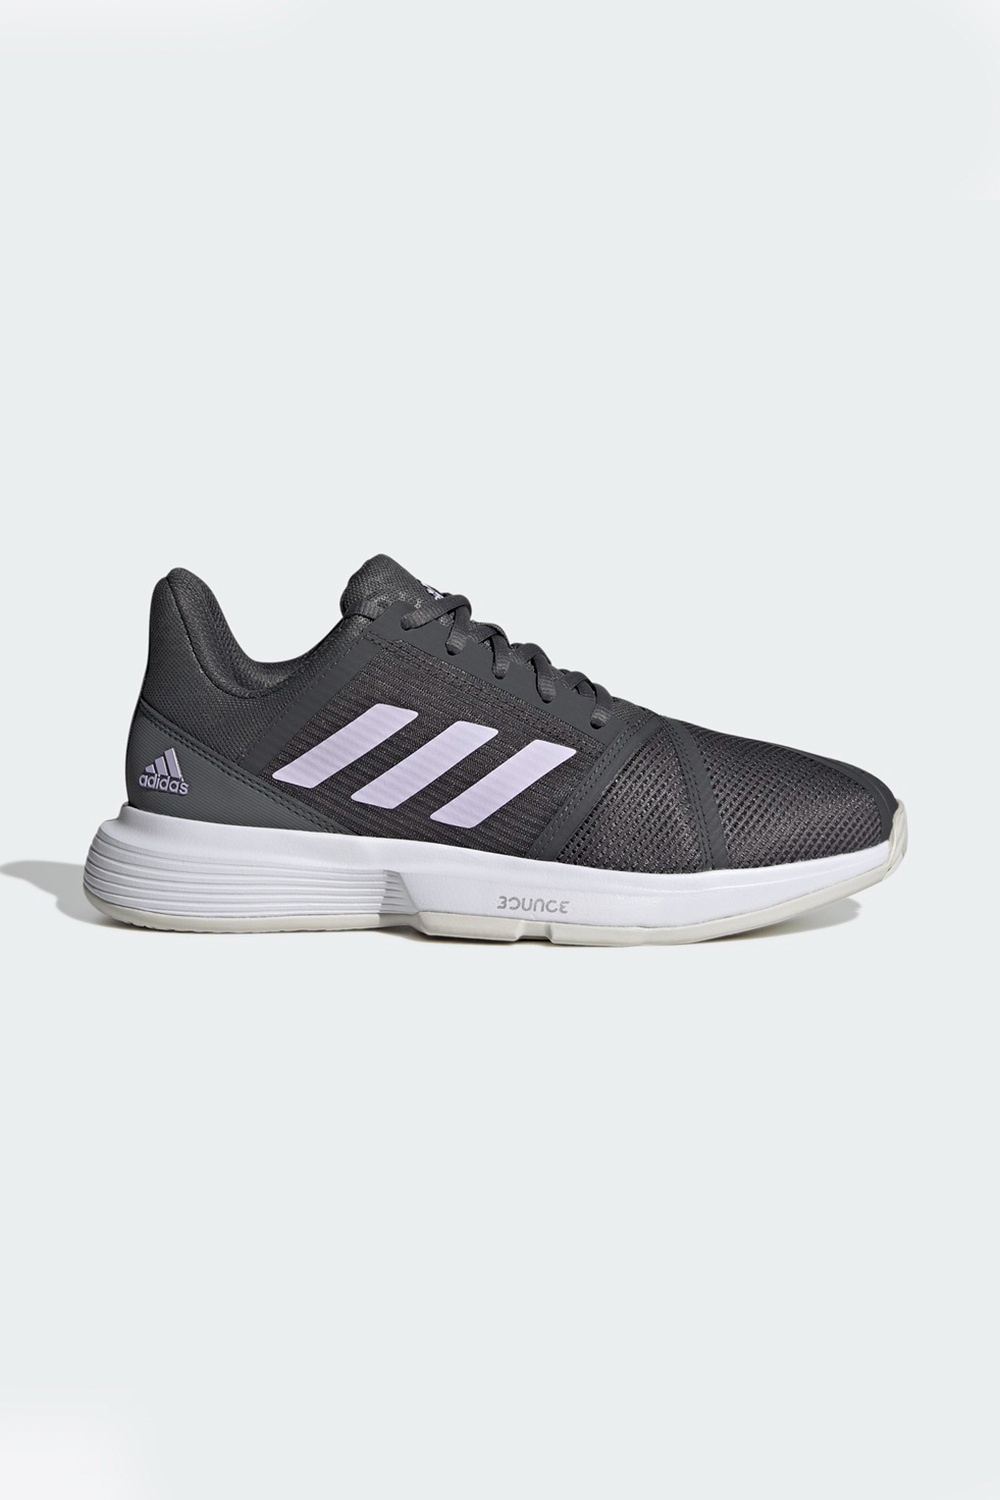 Adidas Womens Tennis Shoes | Odel.lk